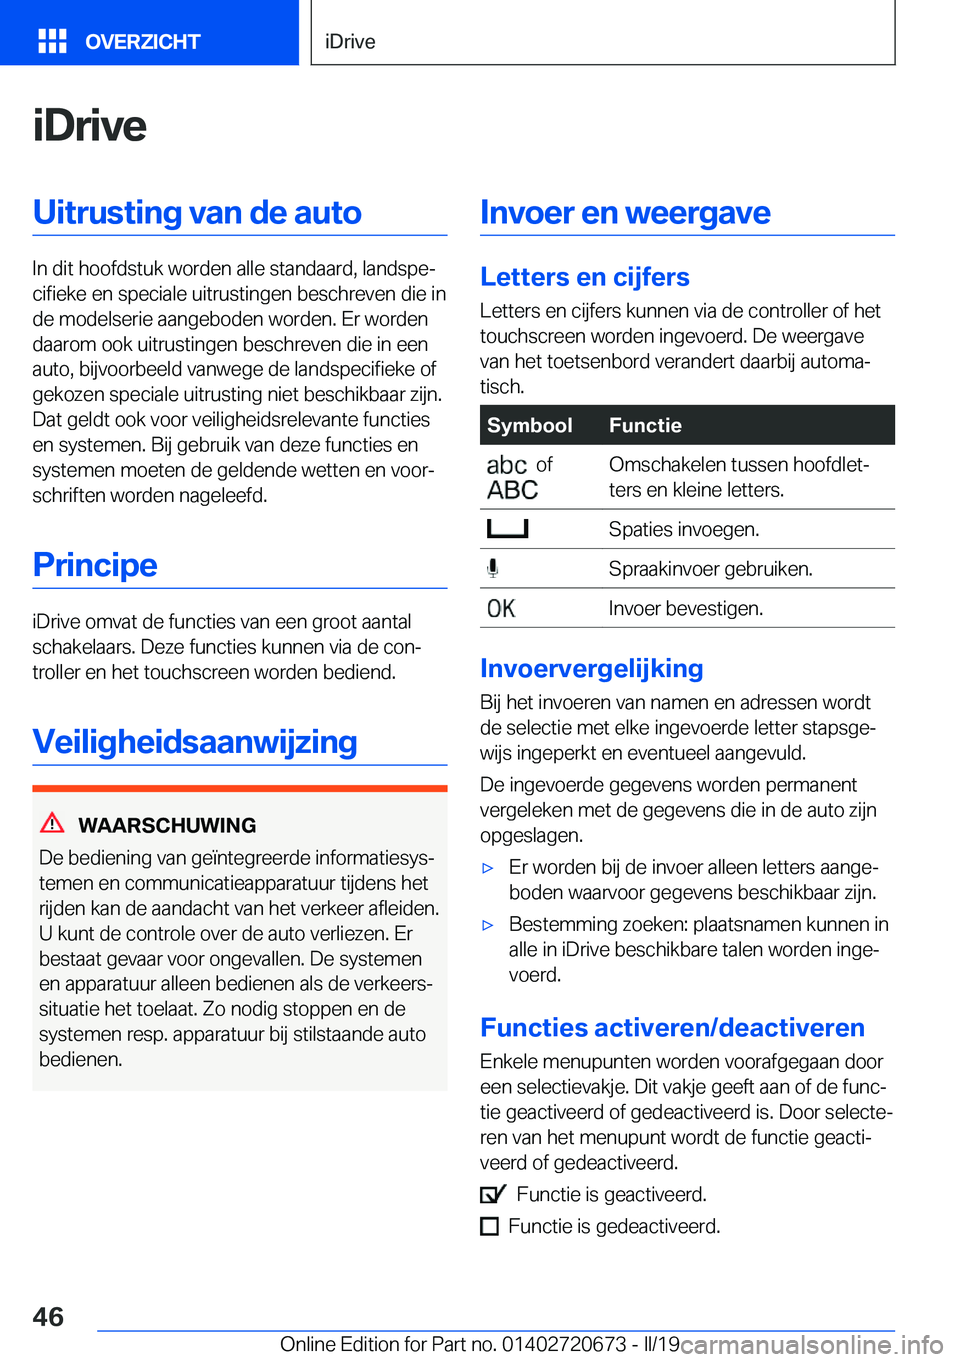 BMW M5 2019  Instructieboekjes (in Dutch) �i�D�r�i�v�e�U�i�t�r�u�s�t�i�n�g��v�a�n��d�e��a�u�t�o
�I�n��d�i�t��h�o�o�f�d�s�t�u�k��w�o�r�d�e�n��a�l�l�e��s�t�a�n�d�a�a�r�d�,��l�a�n�d�s�p�ej�c�i�f�i�e�k�e��e�n��s�p�e�c�i�a�l�e��u�i�t�